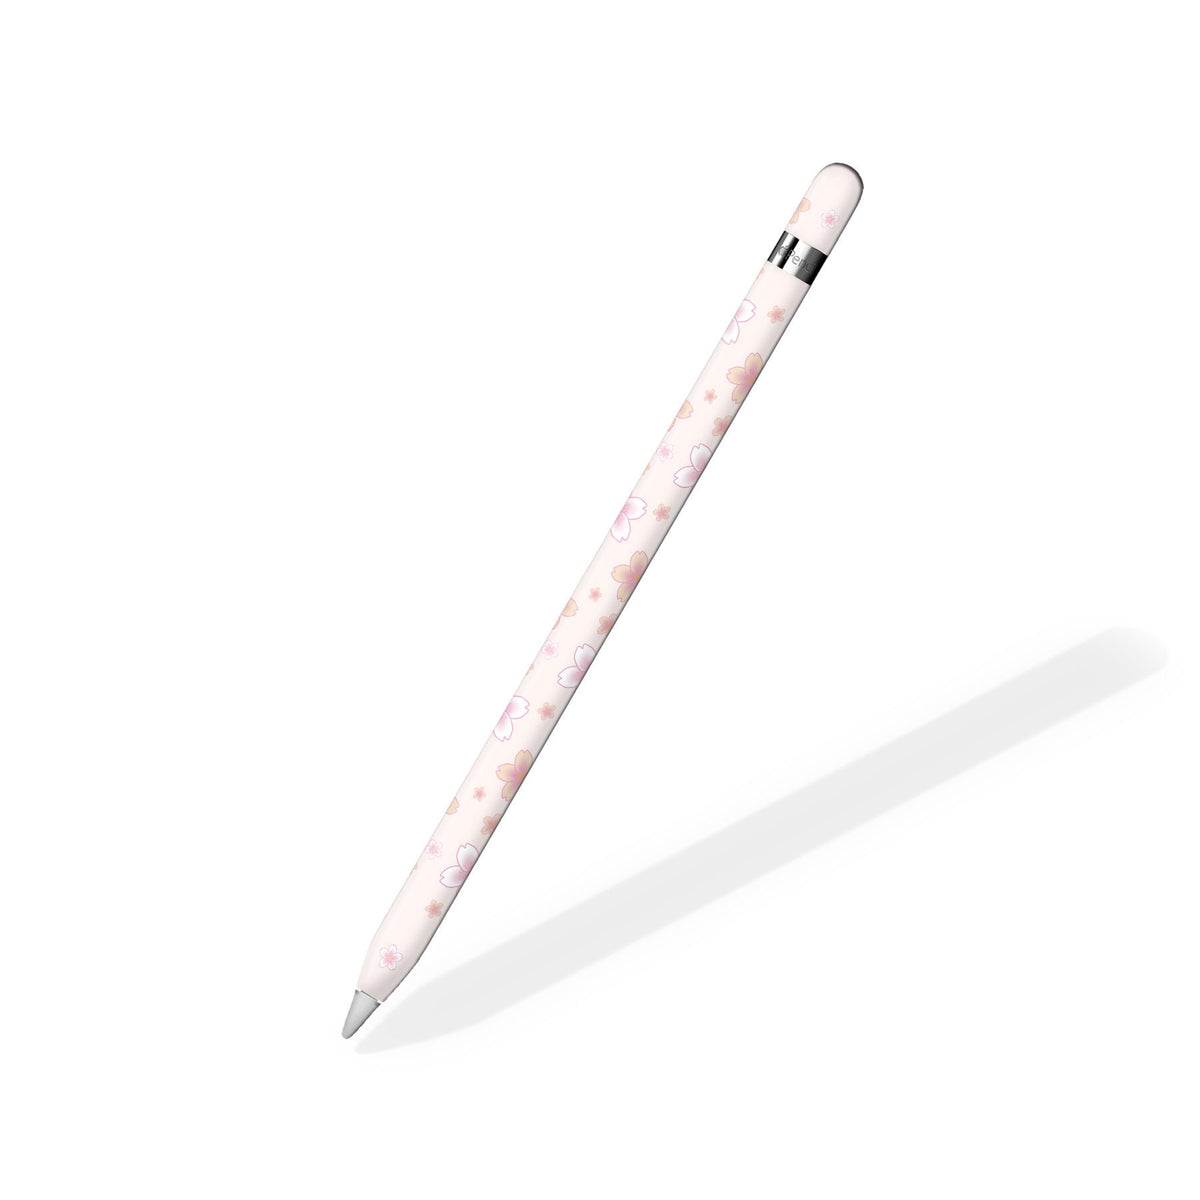 Pastel Apple Pencil skin sakura, Available for Gen 1 And Gen 2, High-Quality 3M Vinyl full wrap